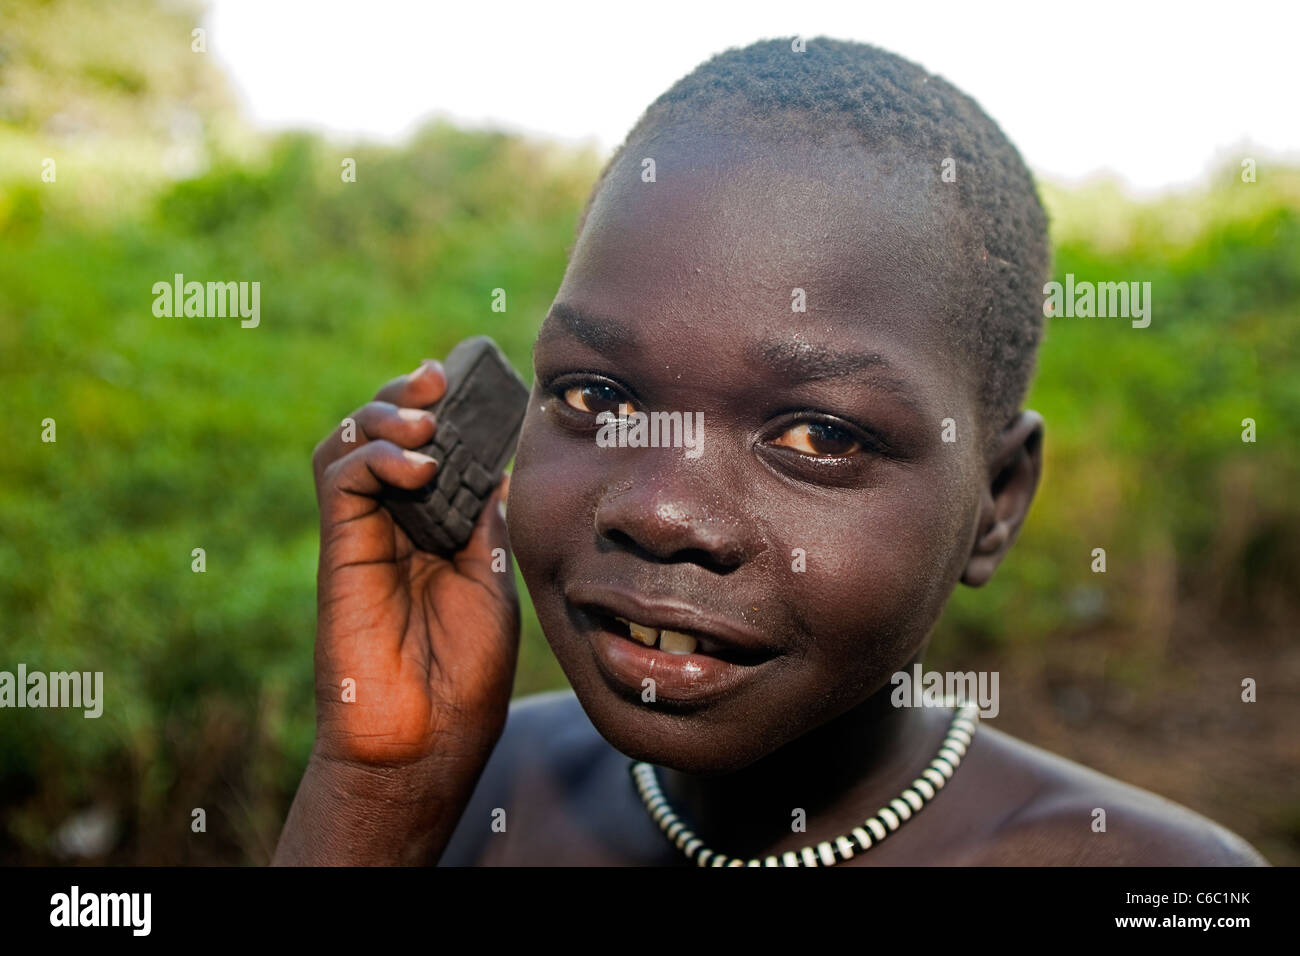 Niño etíope posando con su barro hizo celular toy Etiopía. Foto de stock